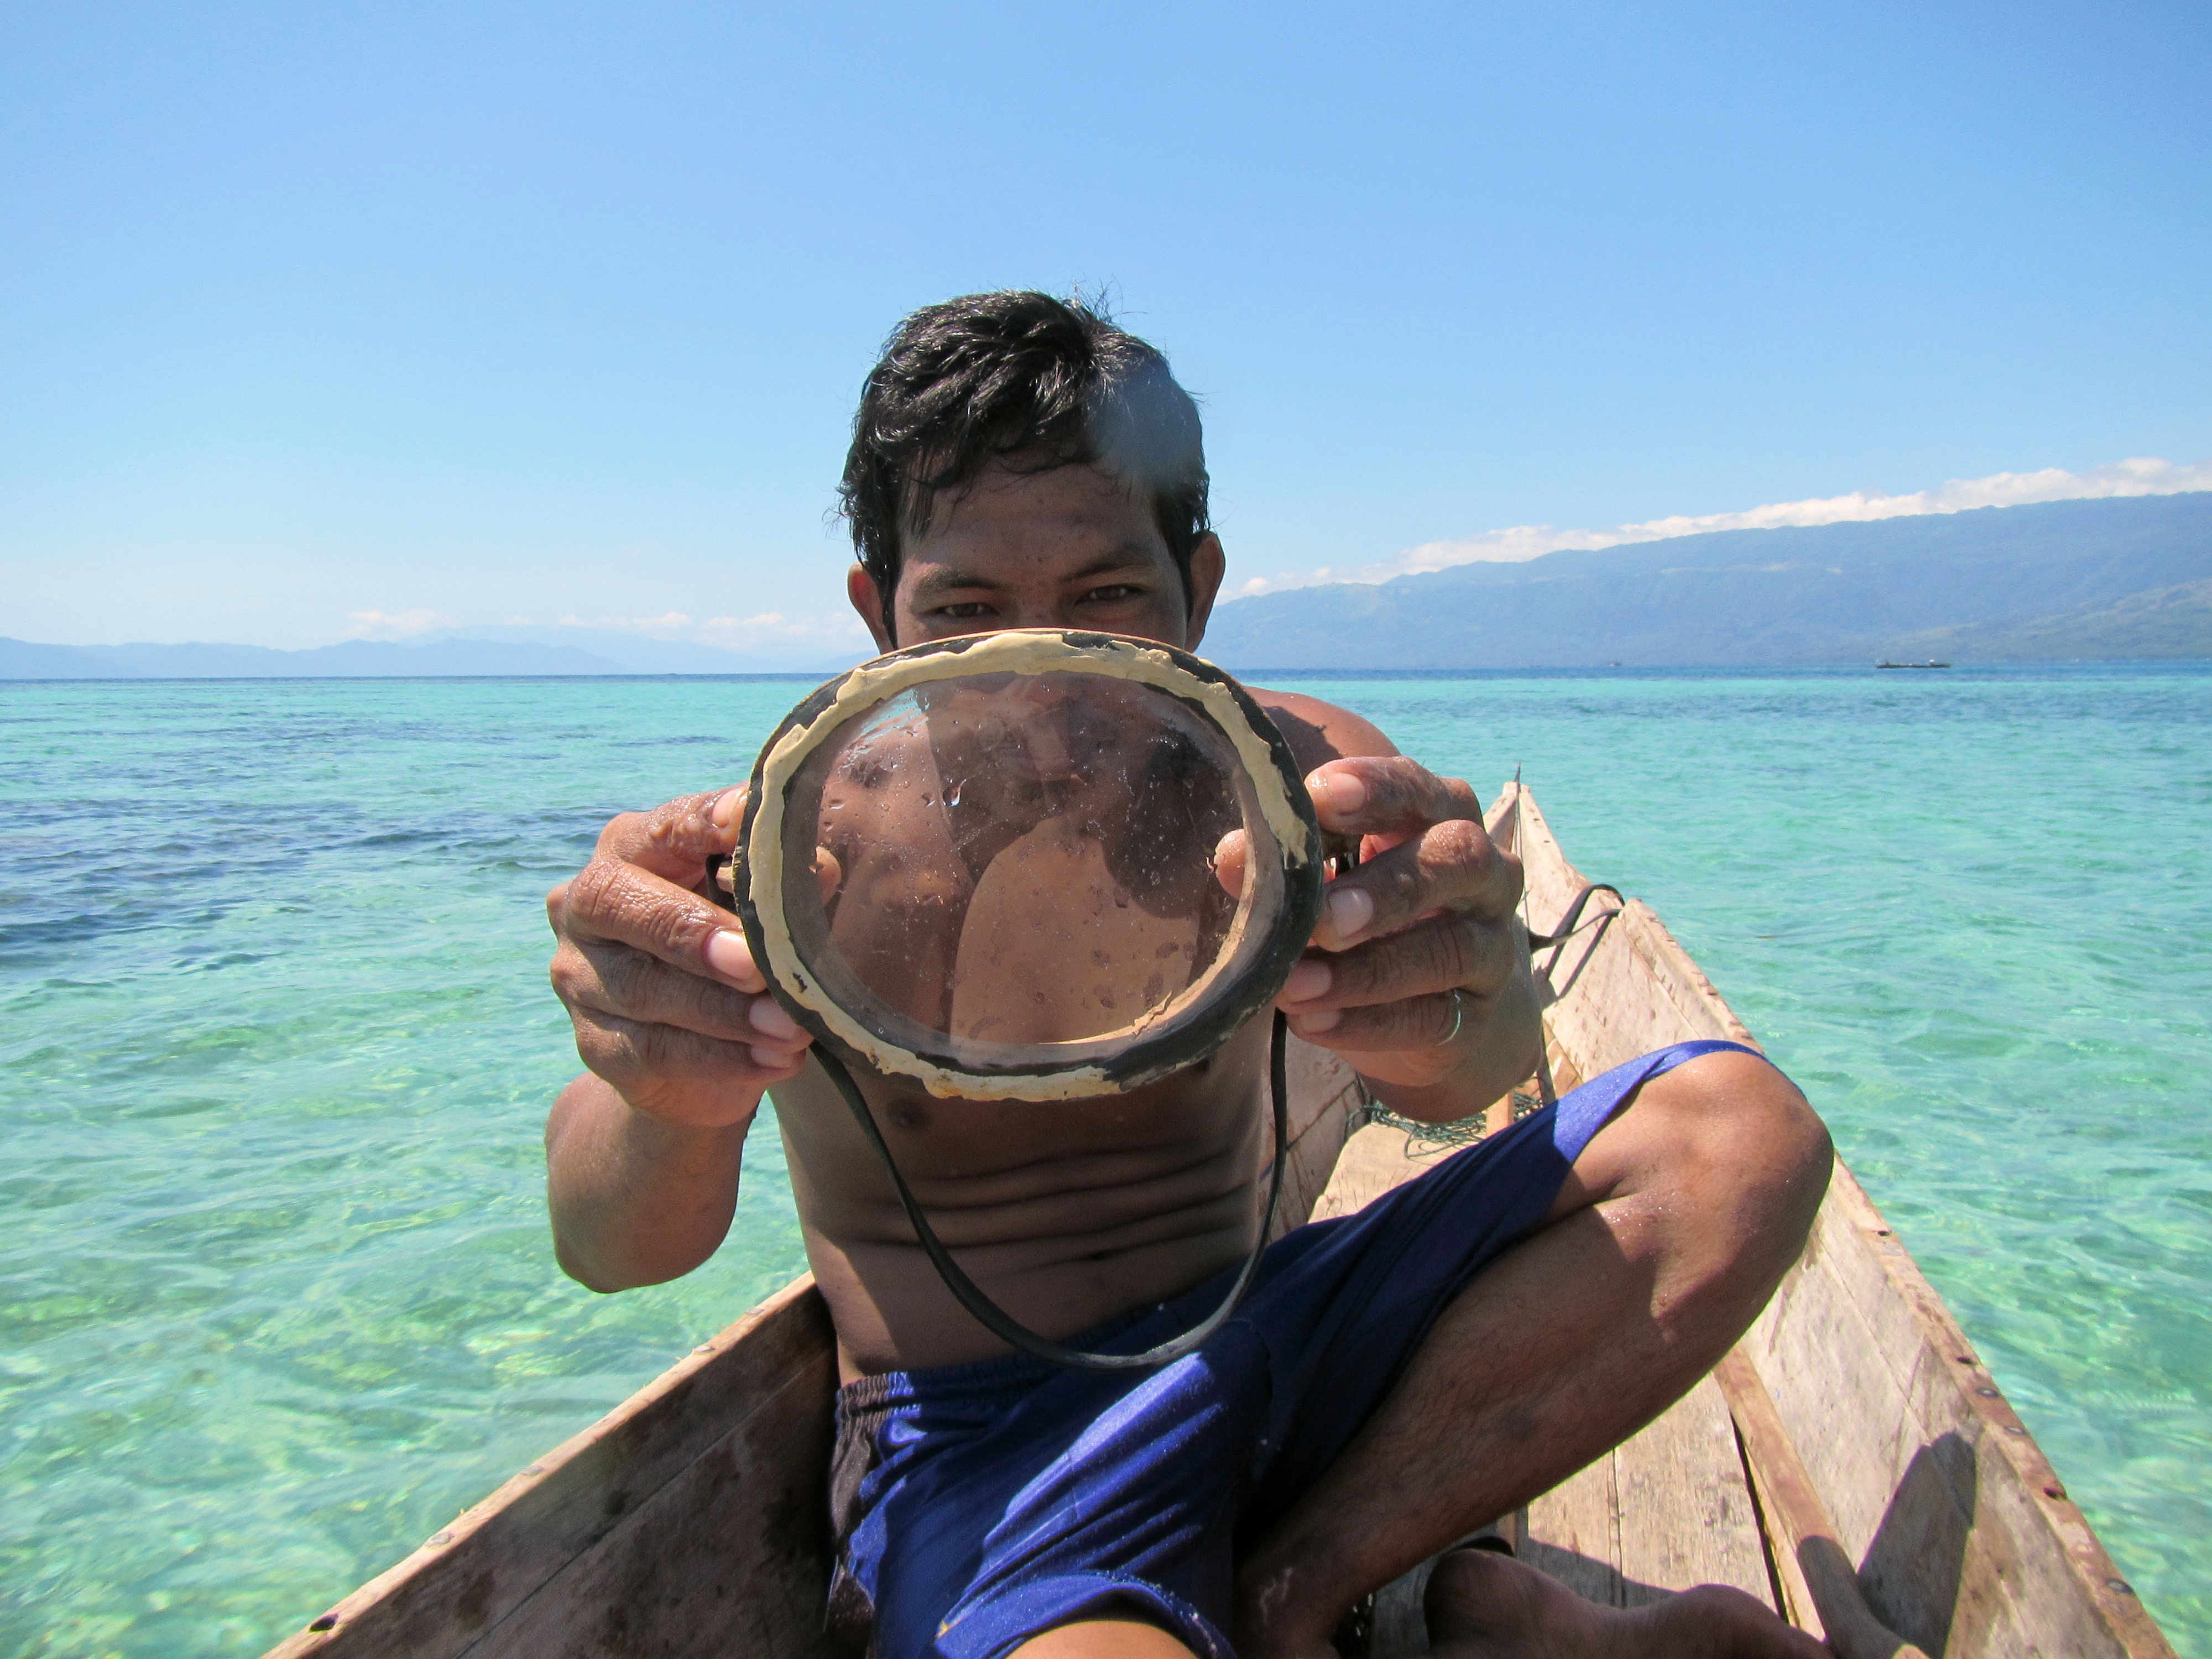 A Bajau diver displays a traditional wooden diving mask.